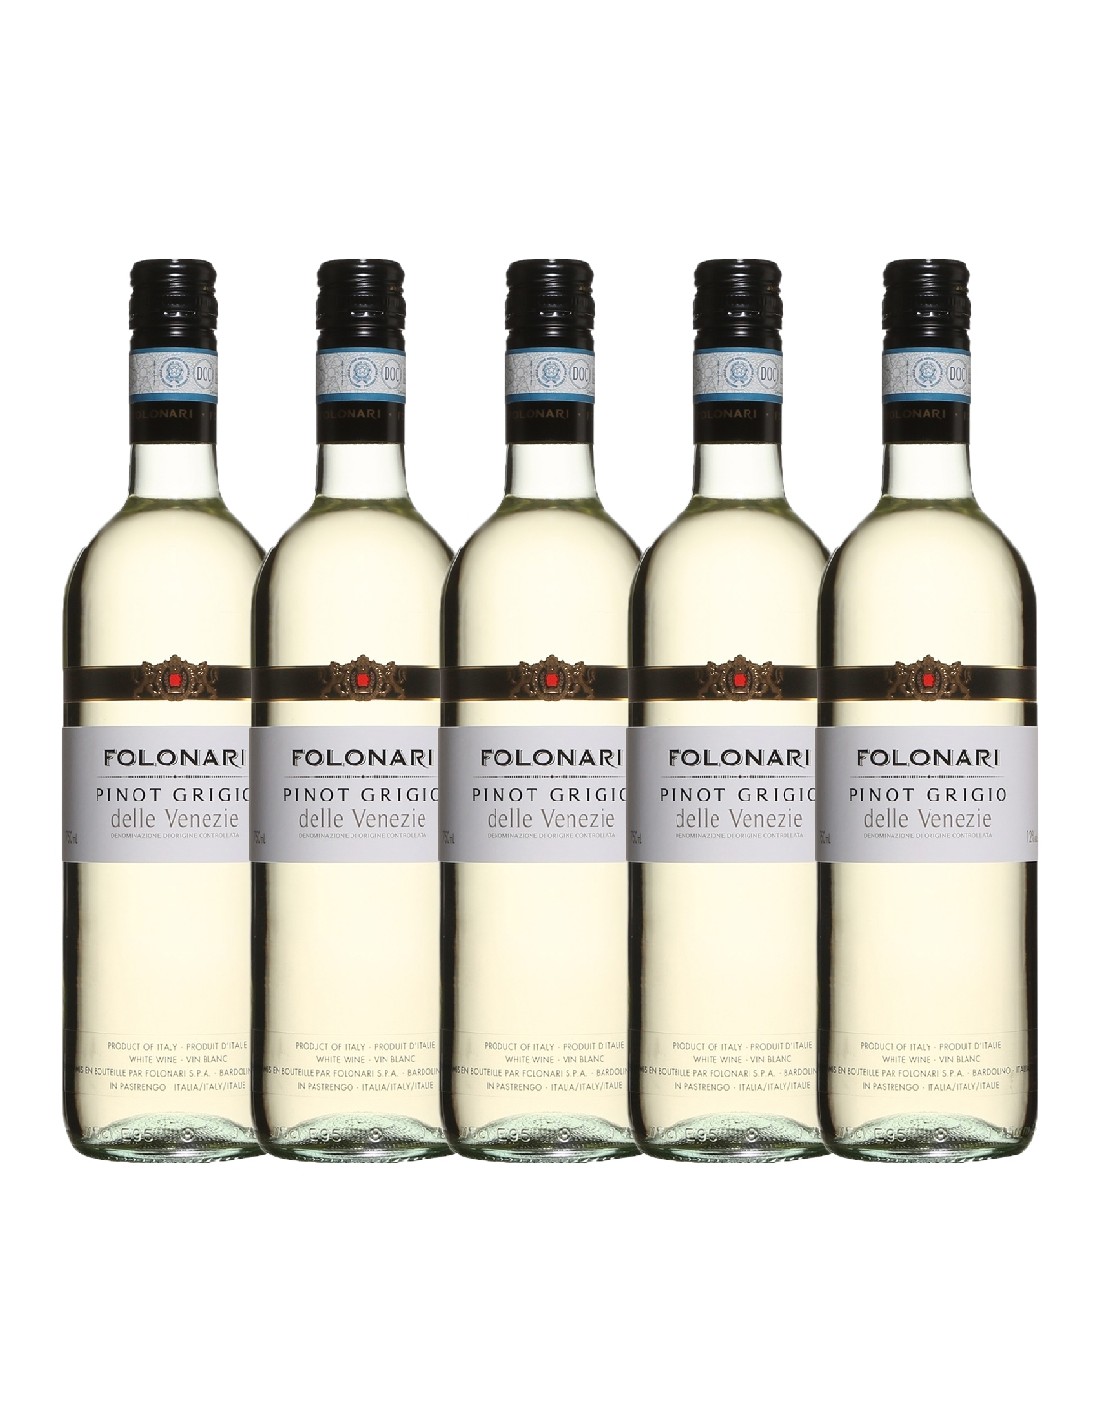 Pachet 5 sticle Vin alb, Pinot Grigio, Folonari delle Venezie, 12% alc., 0.75L, Italia alcooldiscount.ro